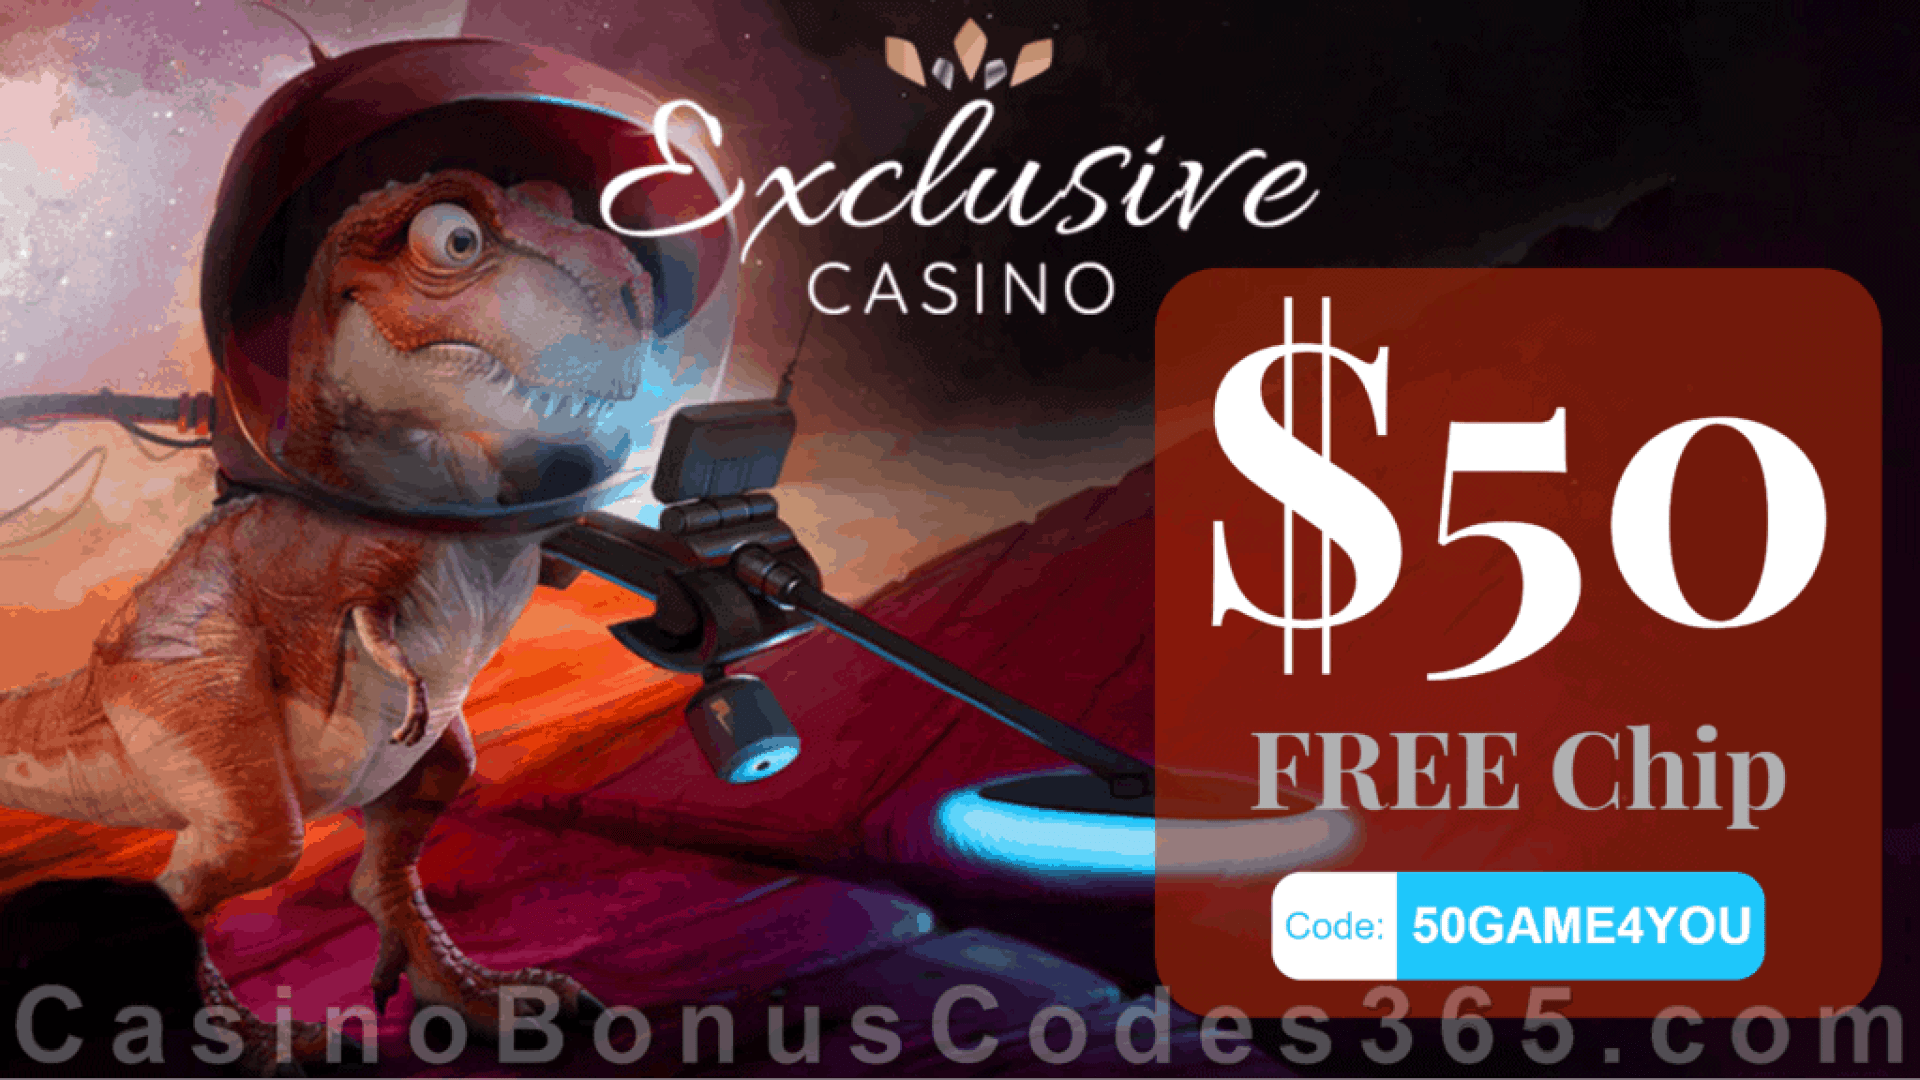 exclusive casino ndb